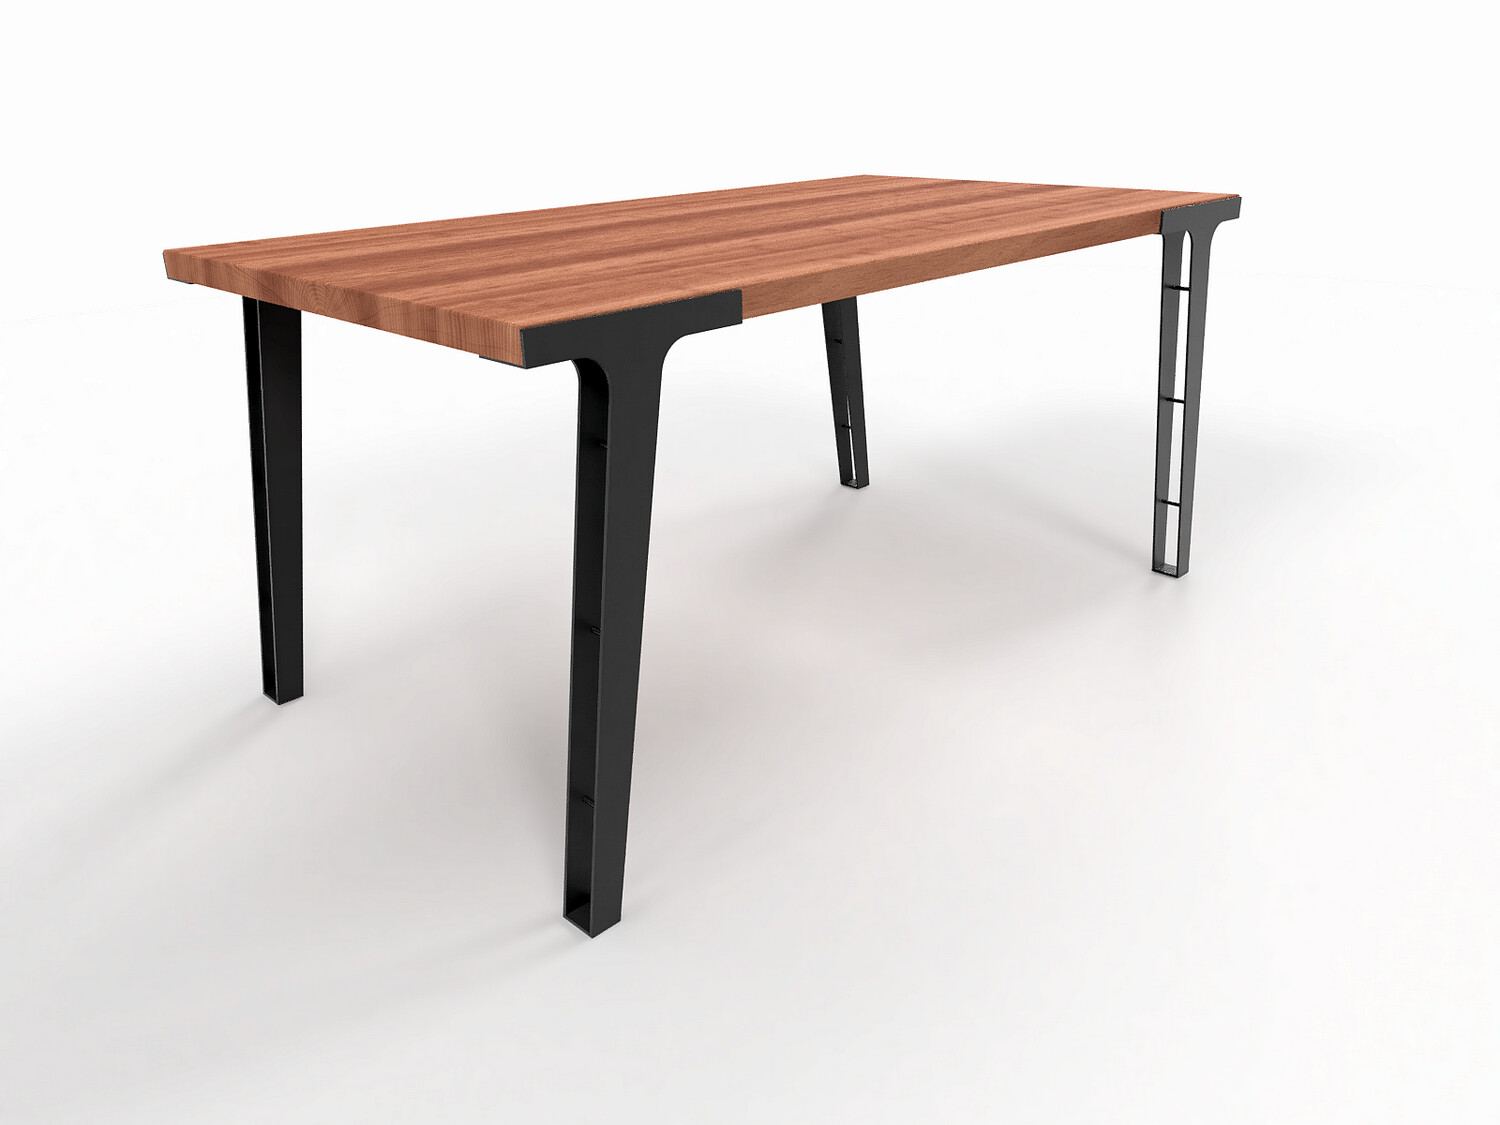 Openwork table legs, Dining table legs, Steel table legs, N101A